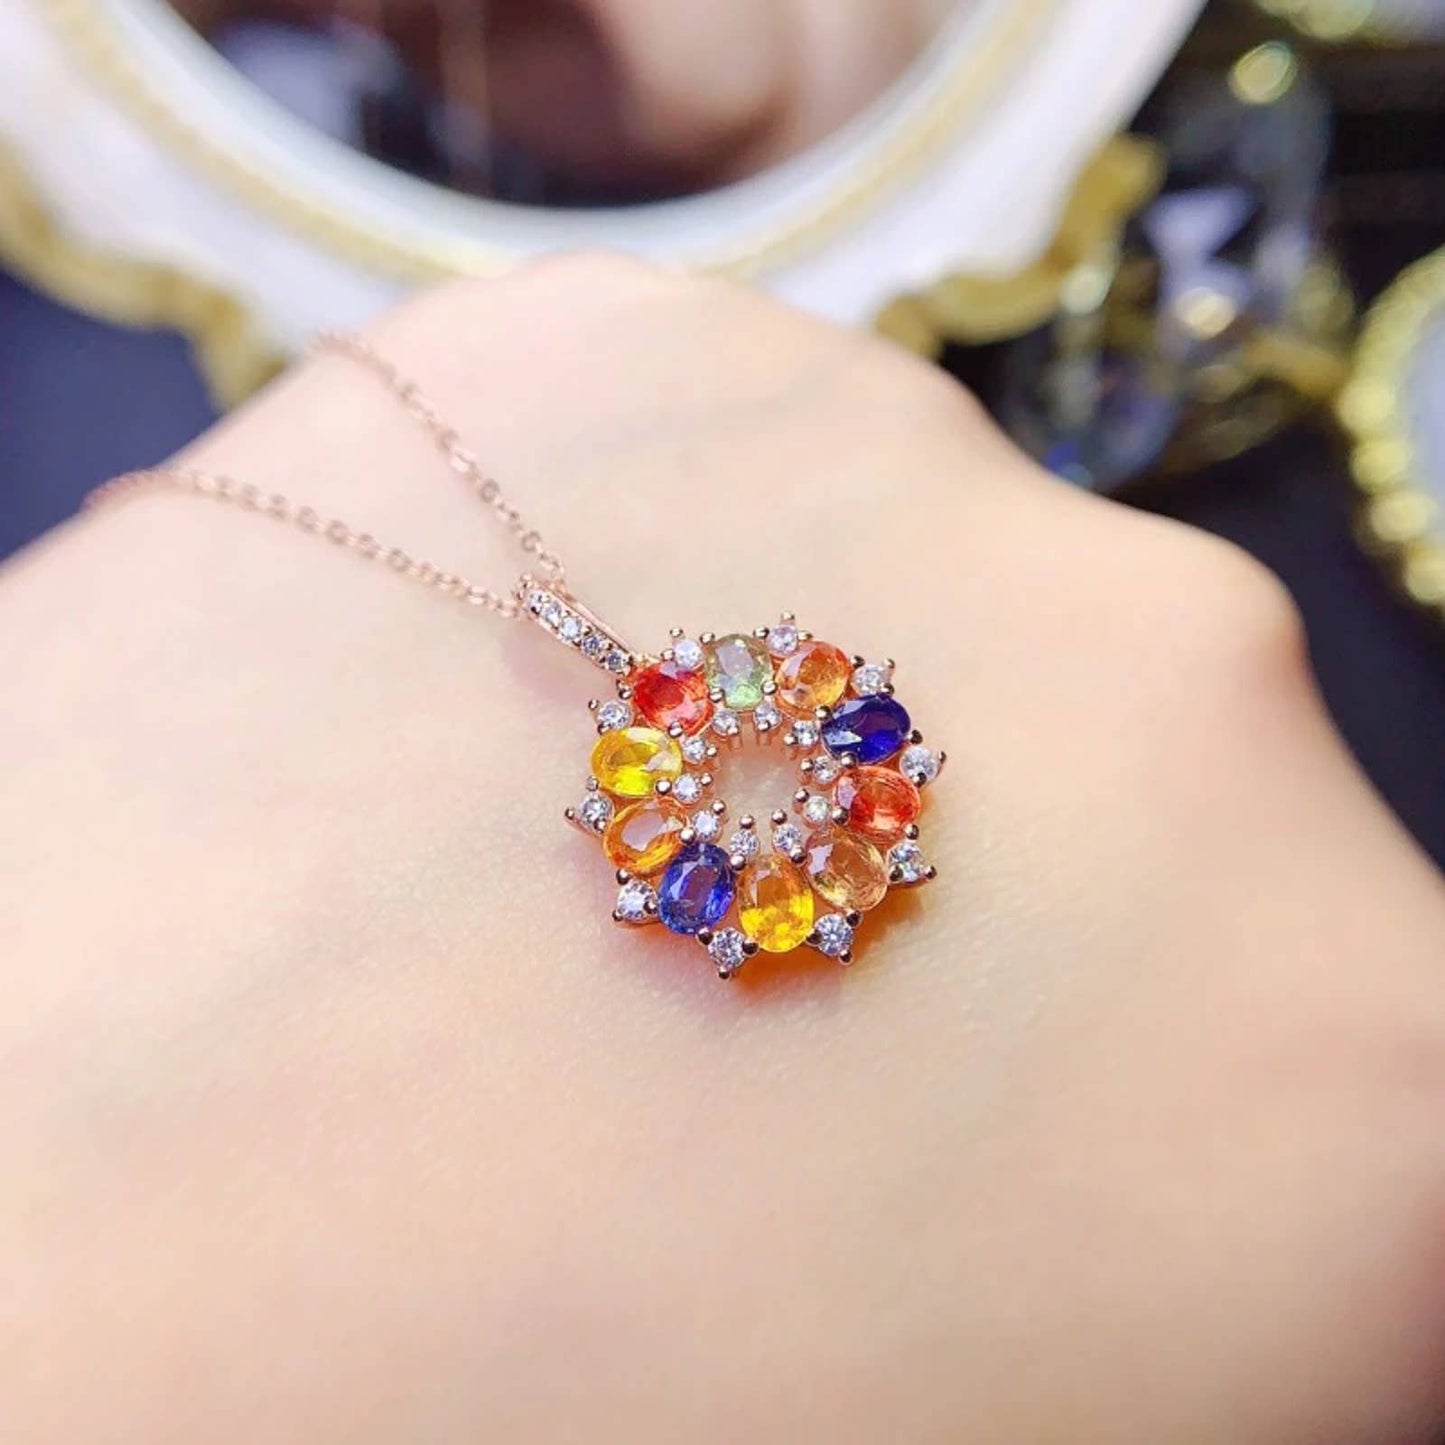 Colorful Sapphire Clavicle Necklace Pendant, 3x4mm Genuine Sapphire Pendant